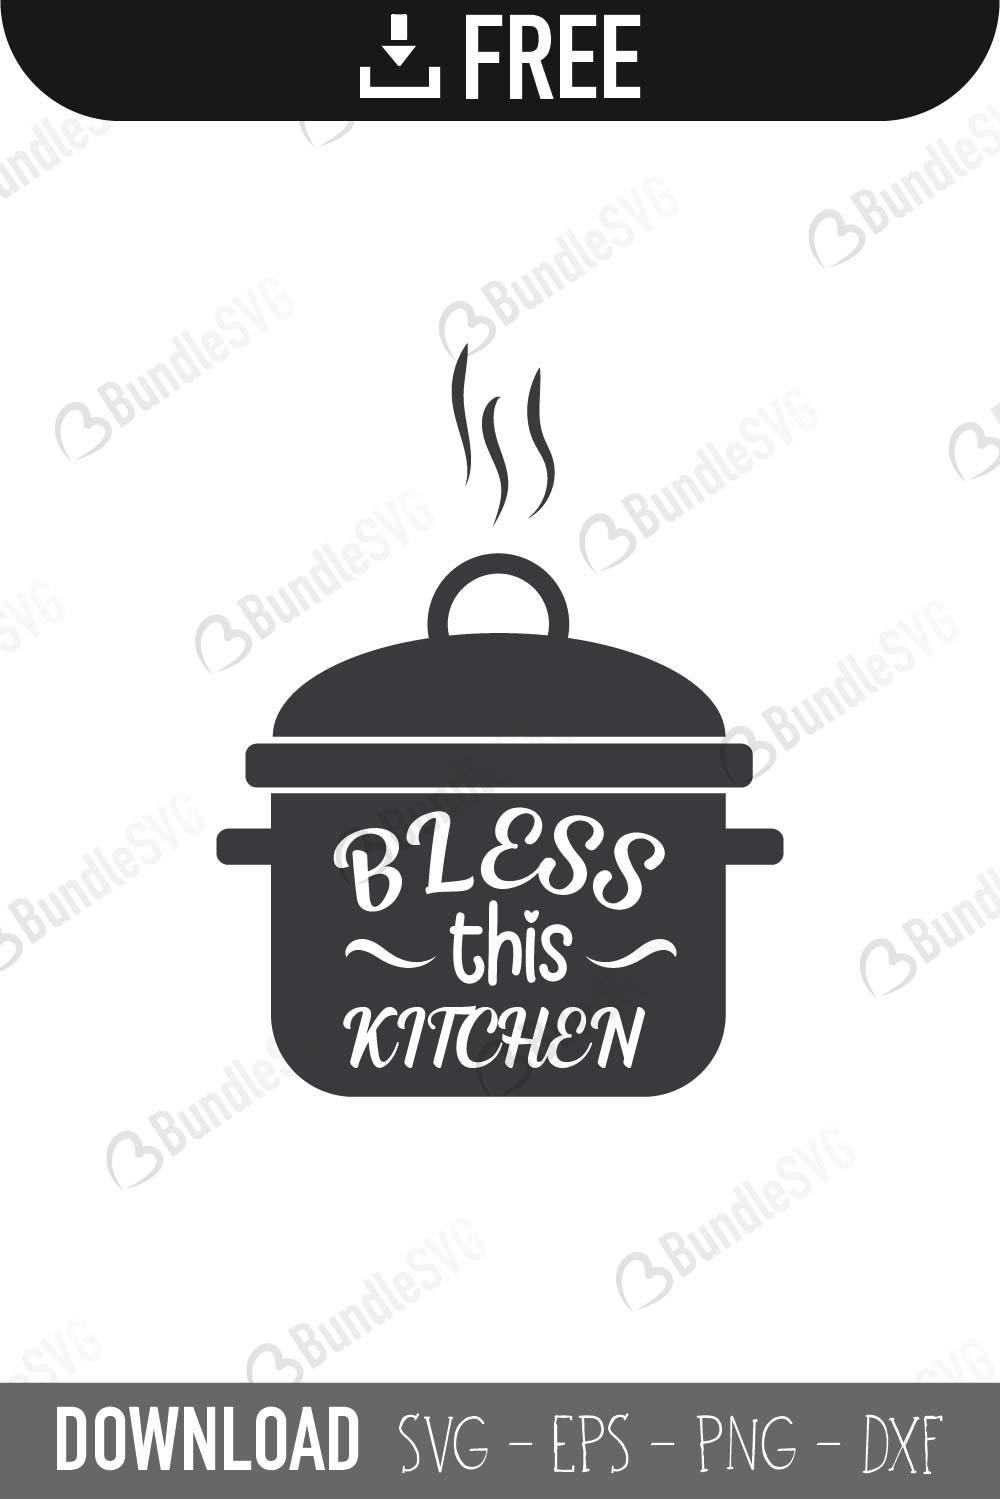 Download Kitchen SVG Cut Files Free Download | BundleSVG